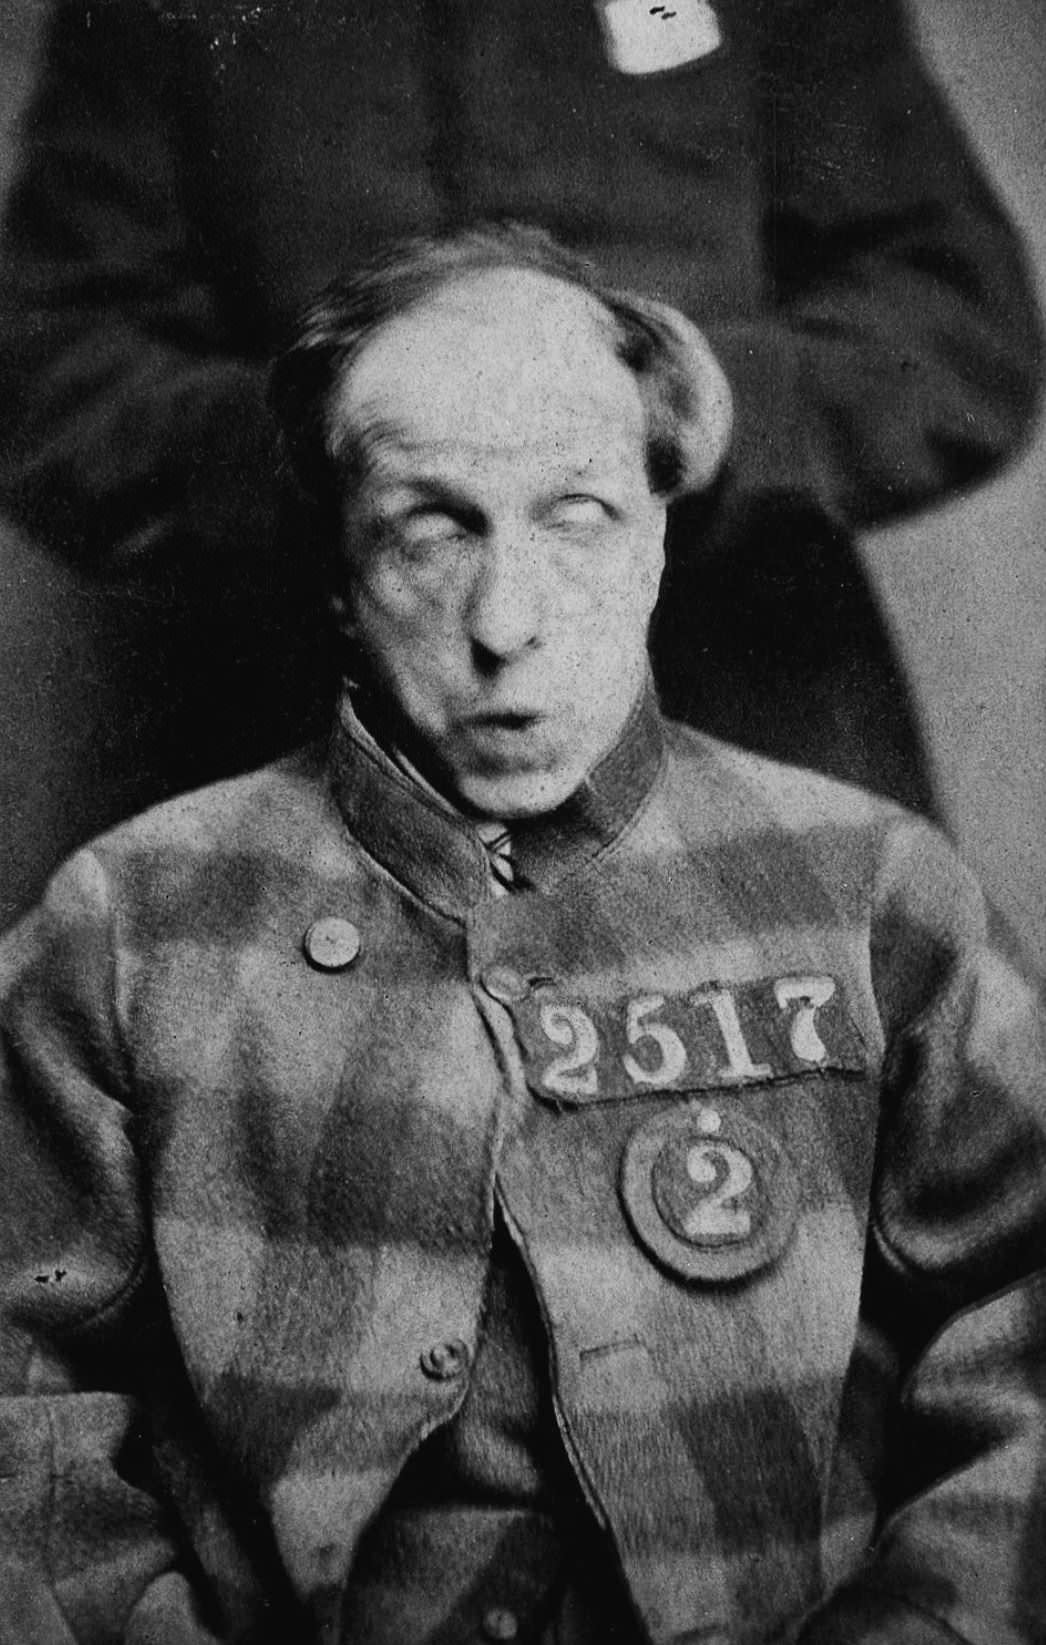 An inmate in an Insane Asylum in England in 1888.